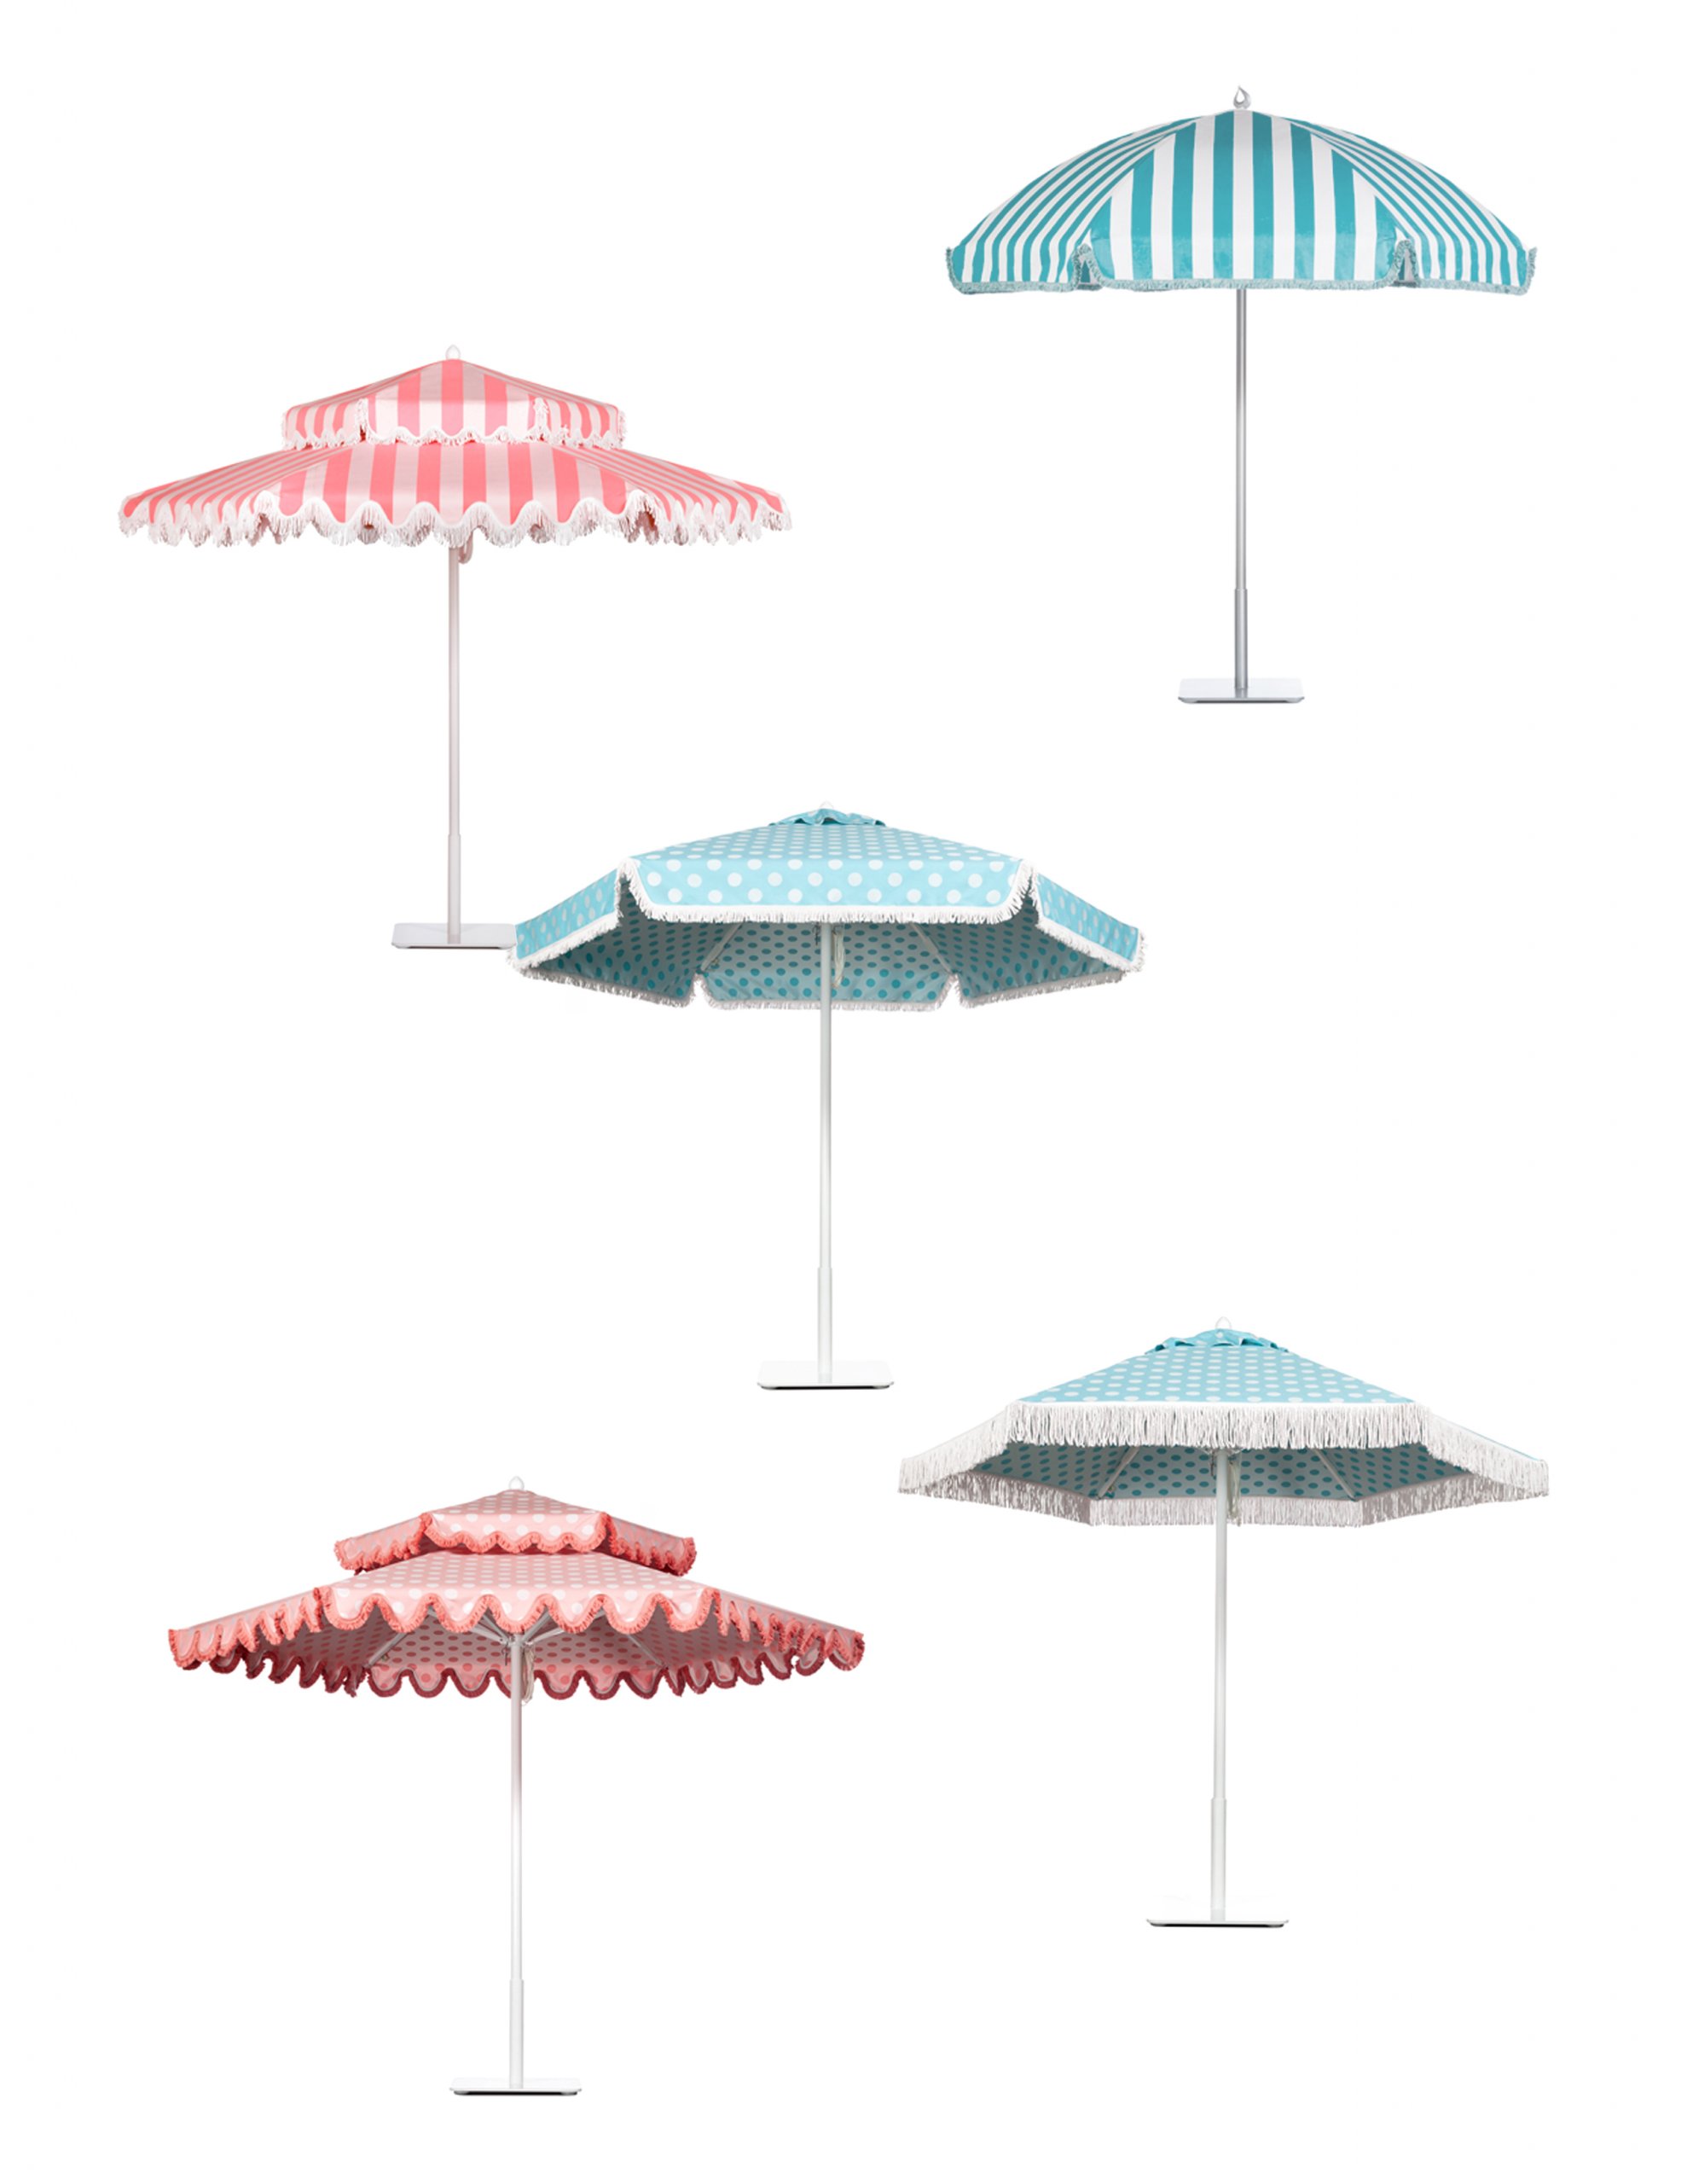 Stacked Umbrellas Image